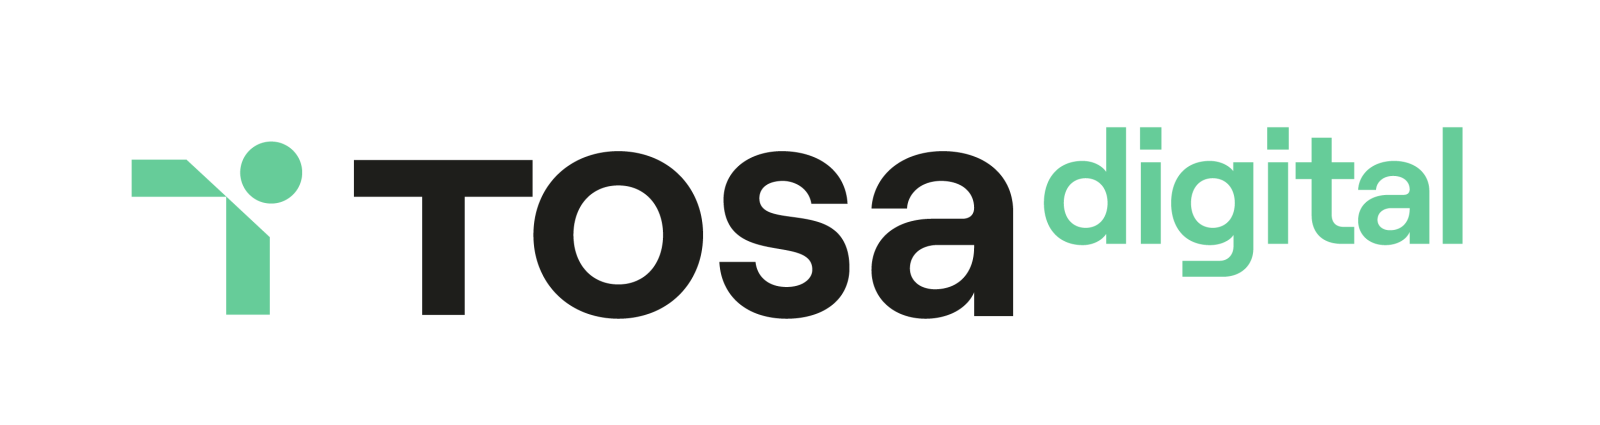 Logo_TosaDigital